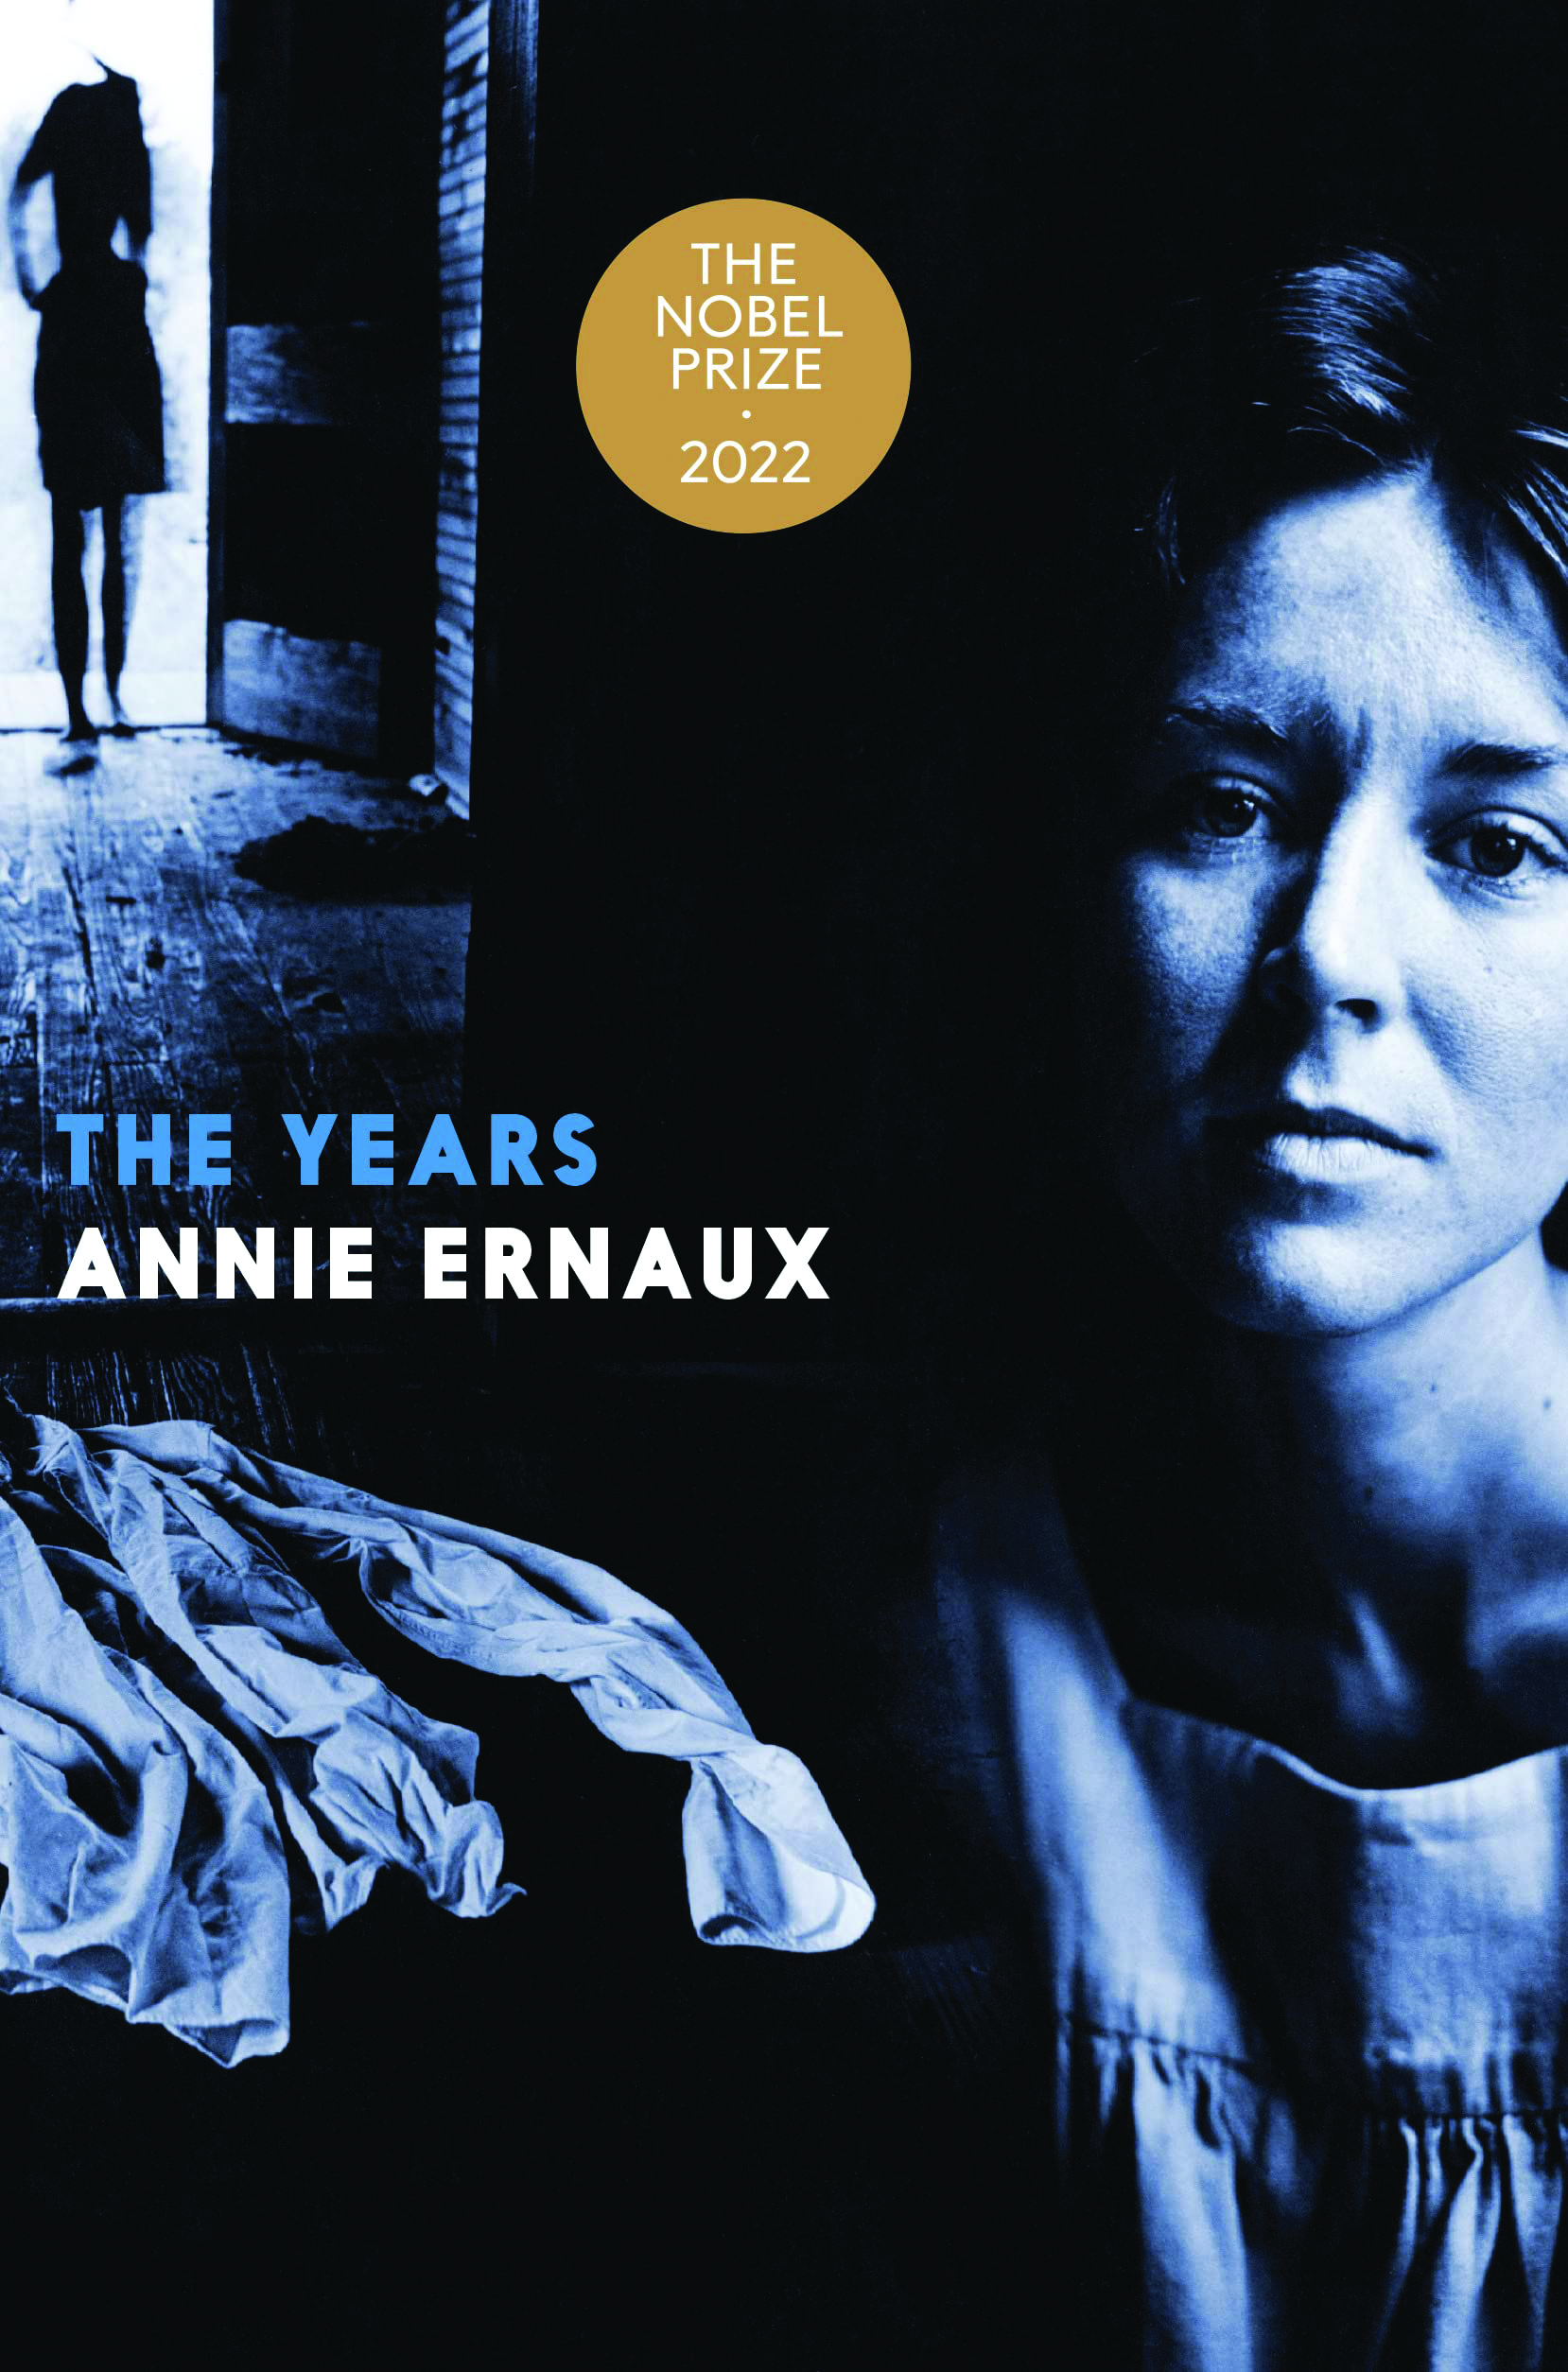 Harper's Bazaar_Tác giả Annie Ernaux đạt giải Nobel Văn học 2023_05